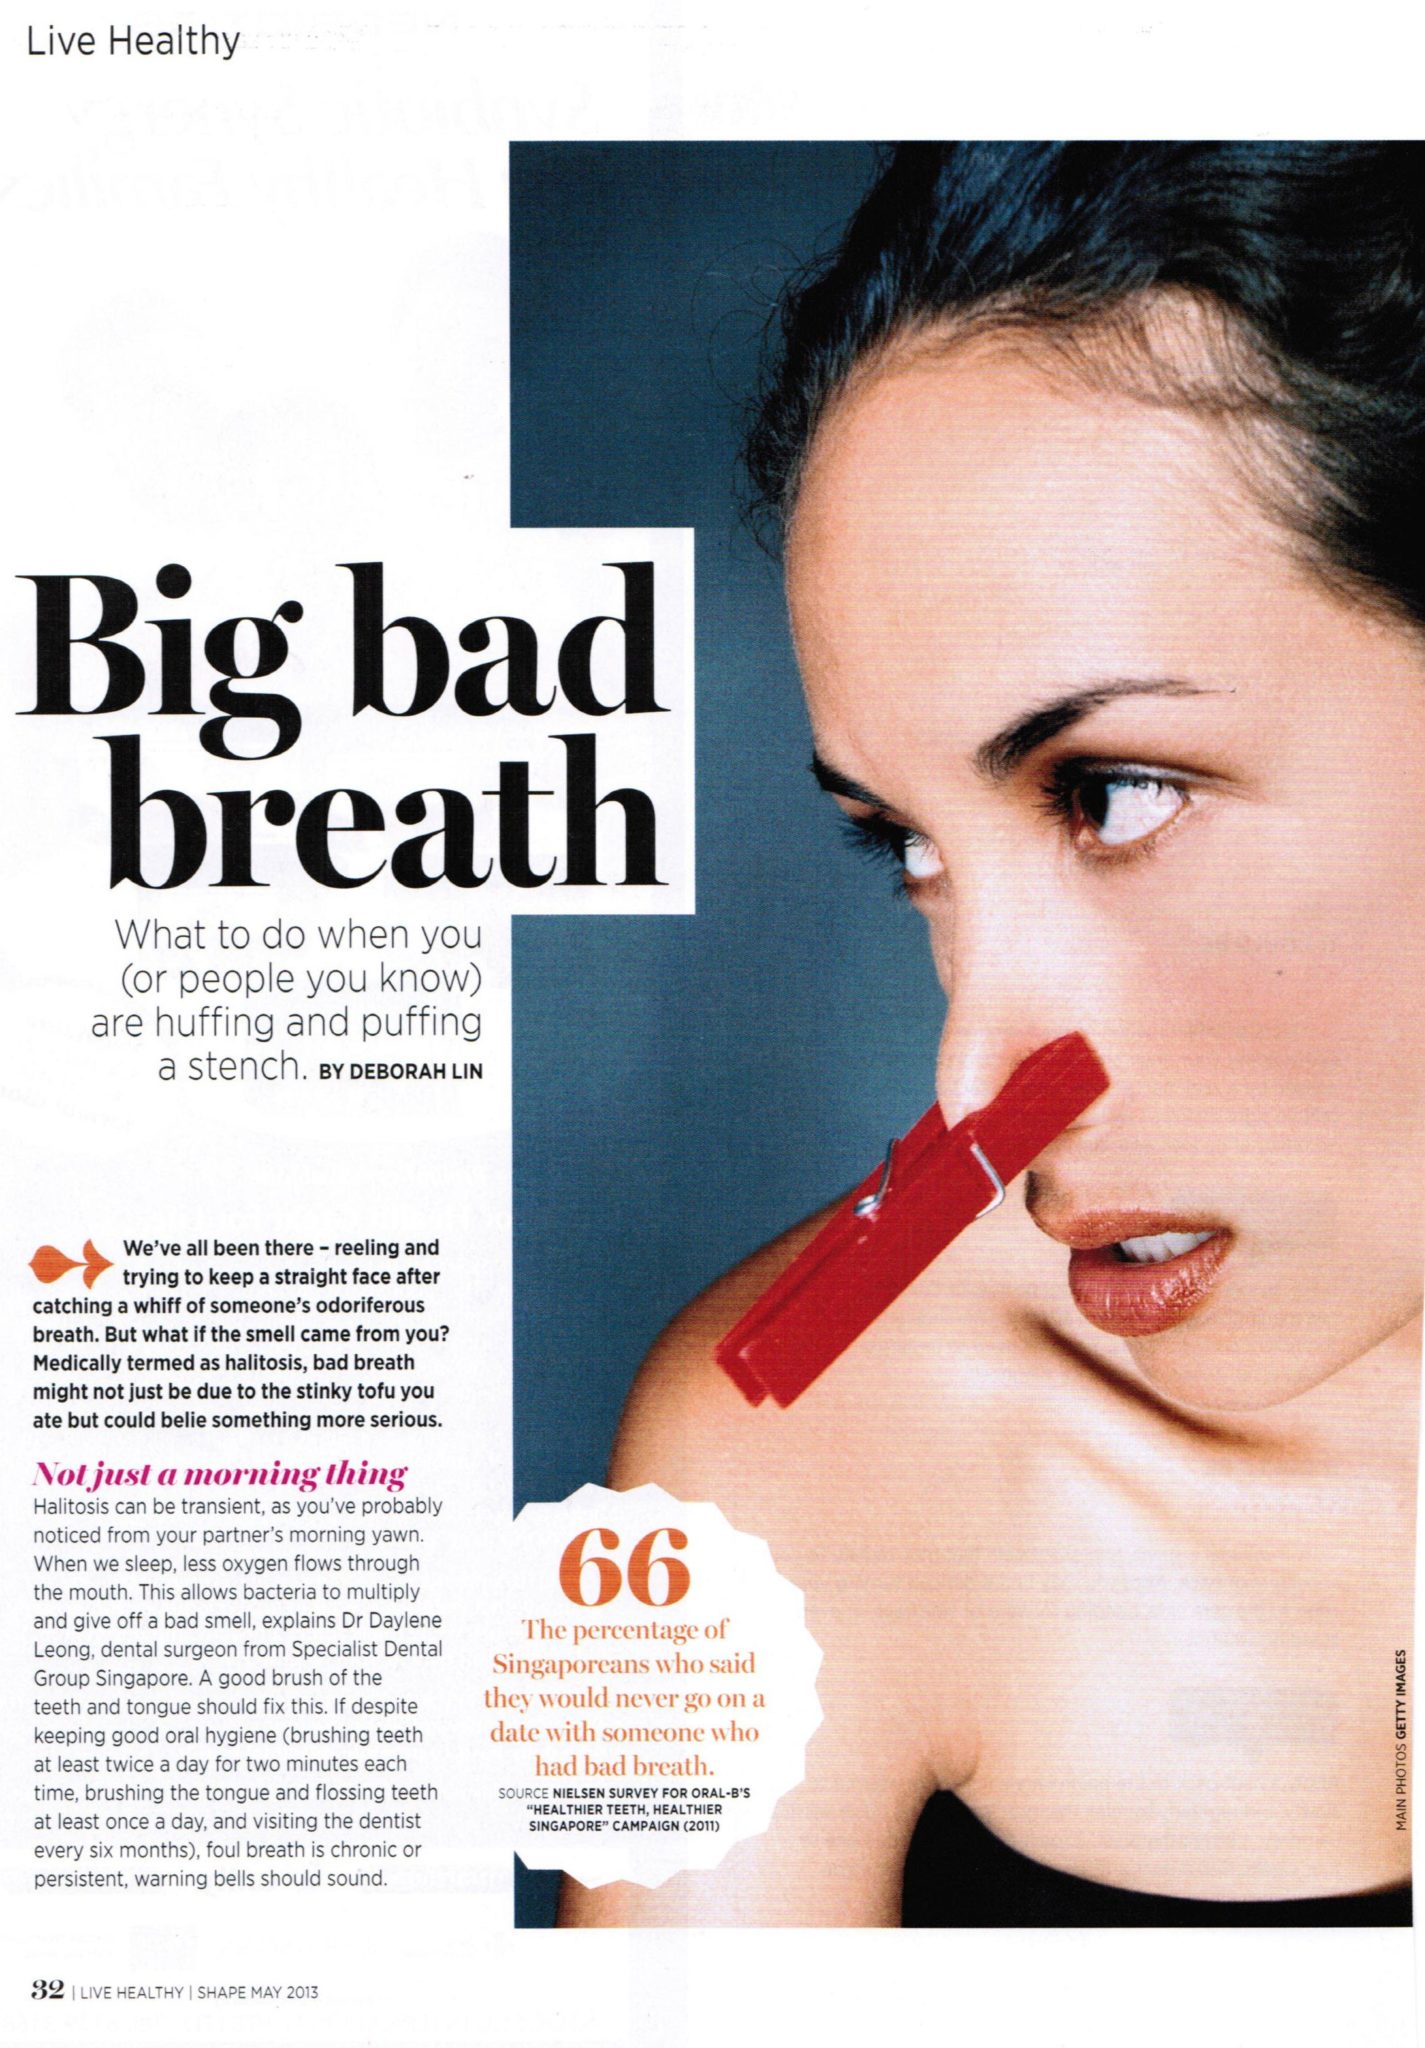 Shape Magazine, May 2013 issue: “Big Bad Breath”